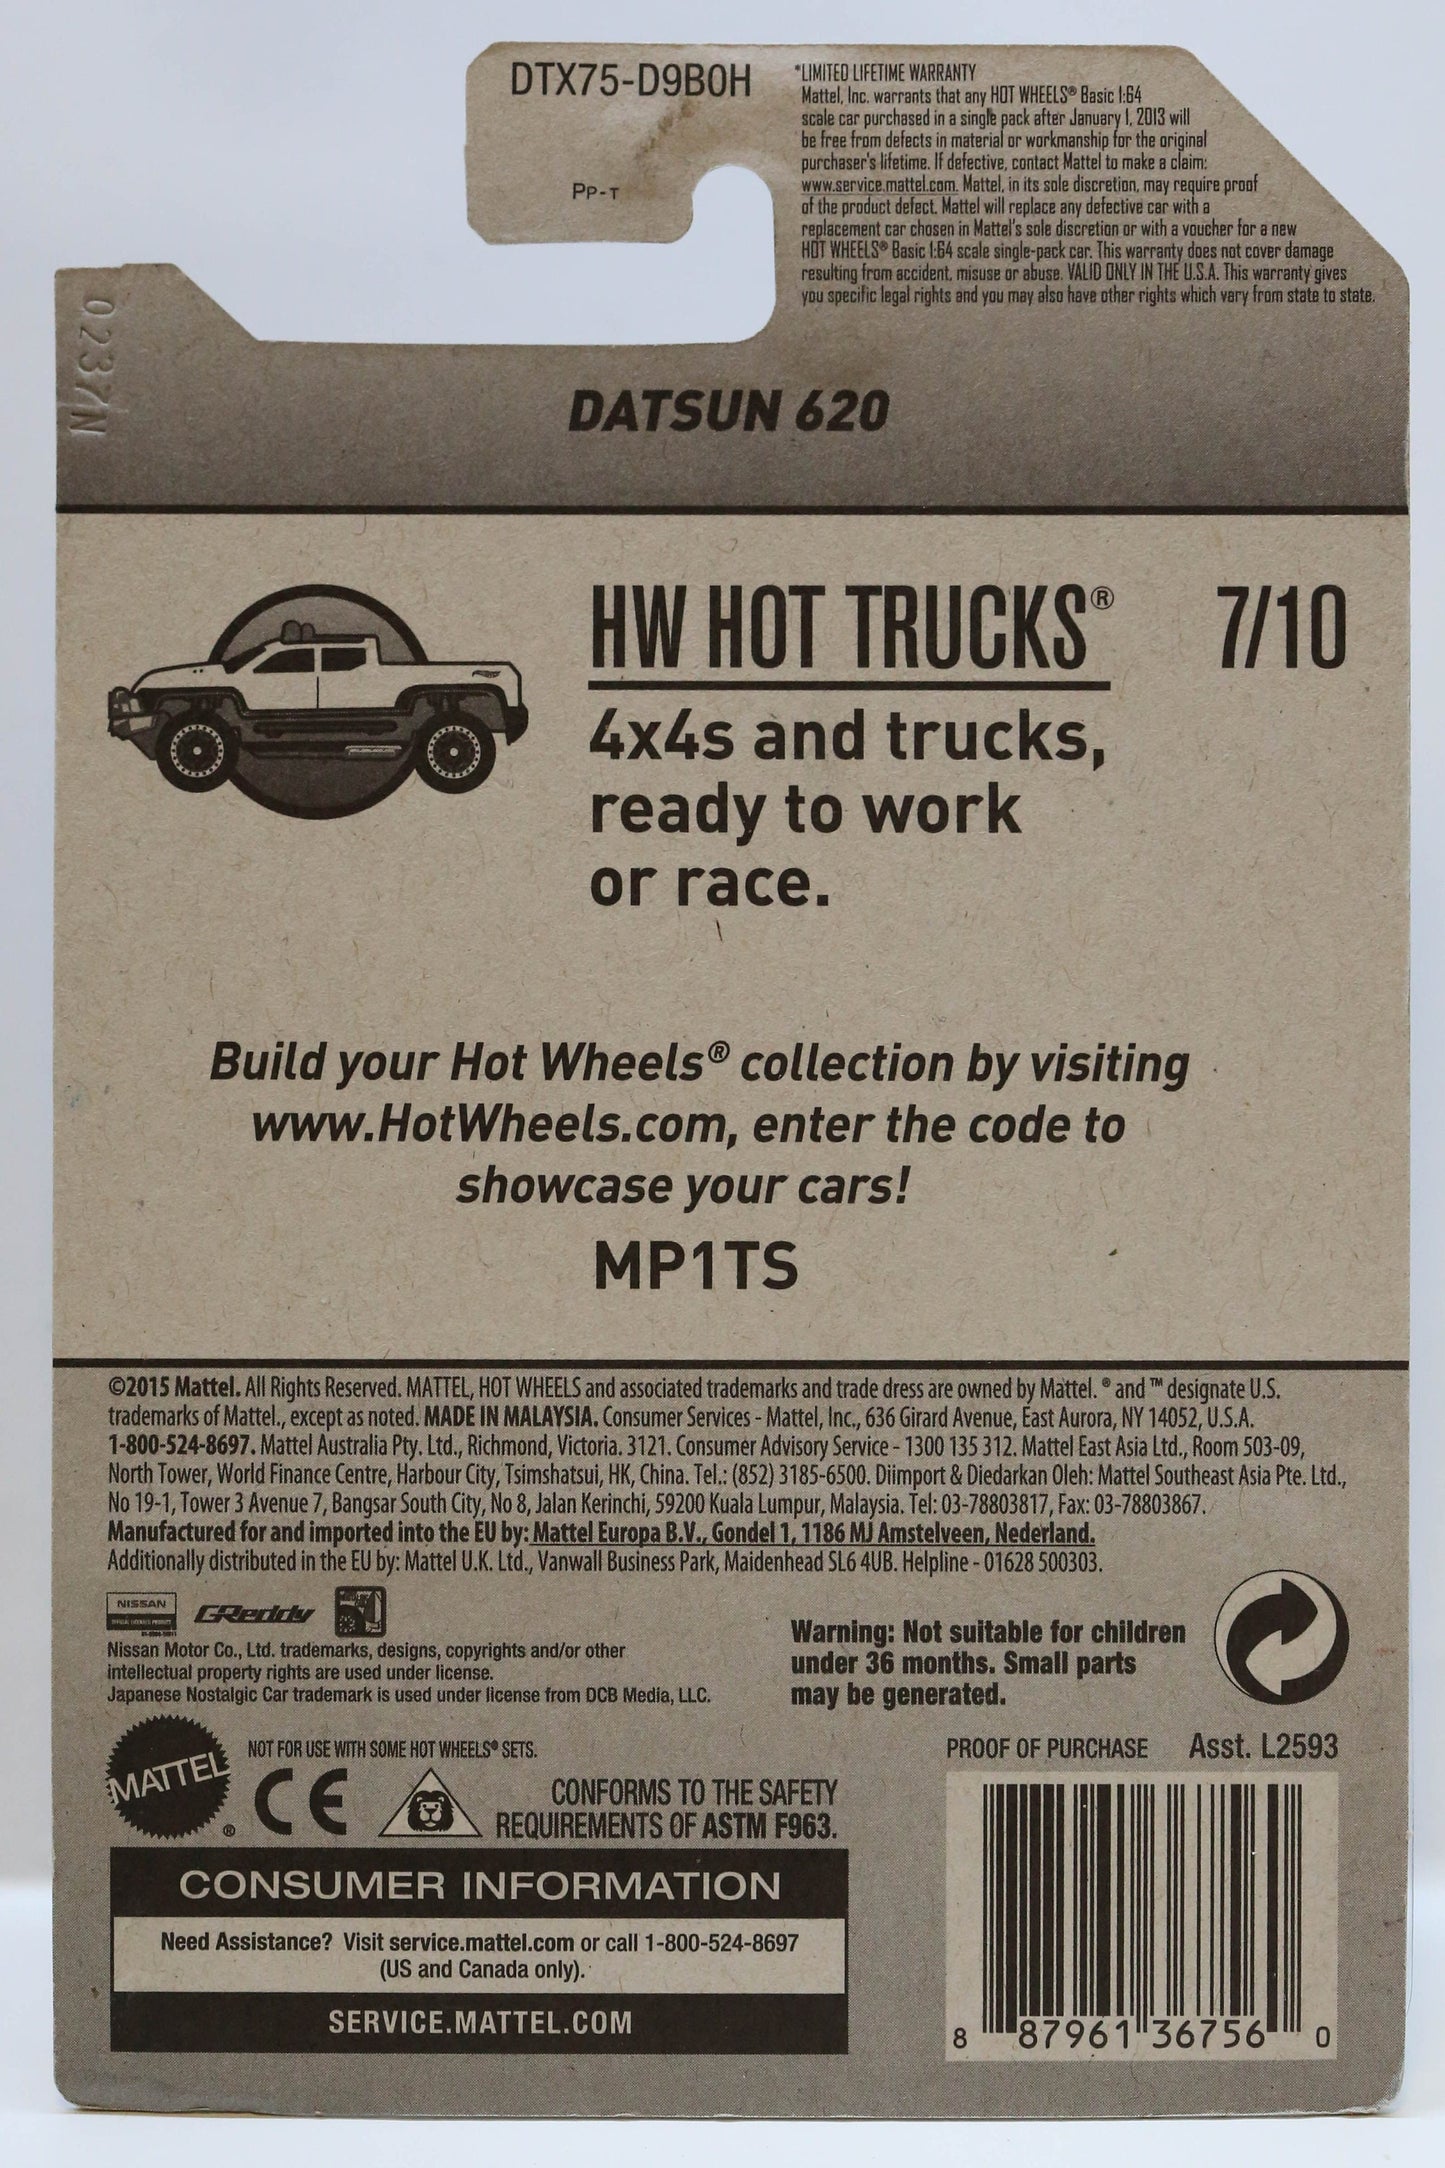 Hot Wheels Datsun 620 Pickup HW Hot Trucks DTX75 - Plus (+) a Bonus Hot Wheel - Rare and HTF